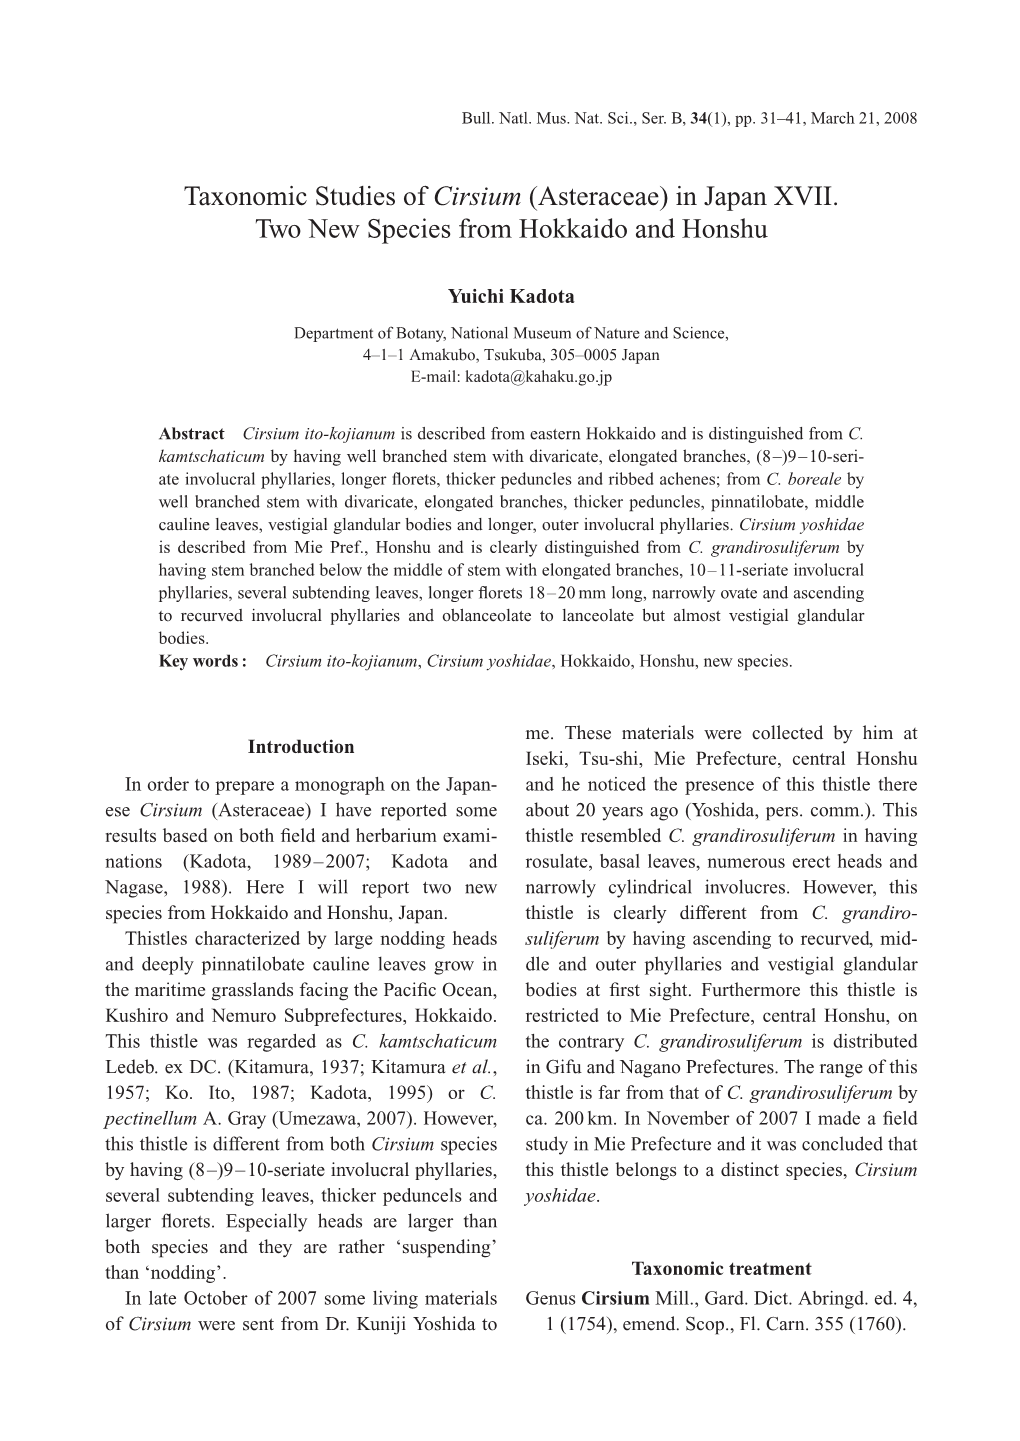 Taxonomic Studies of Cirsium (Asteraceae) in Japan XVII. Two New Species from Hokkaido and Honshu